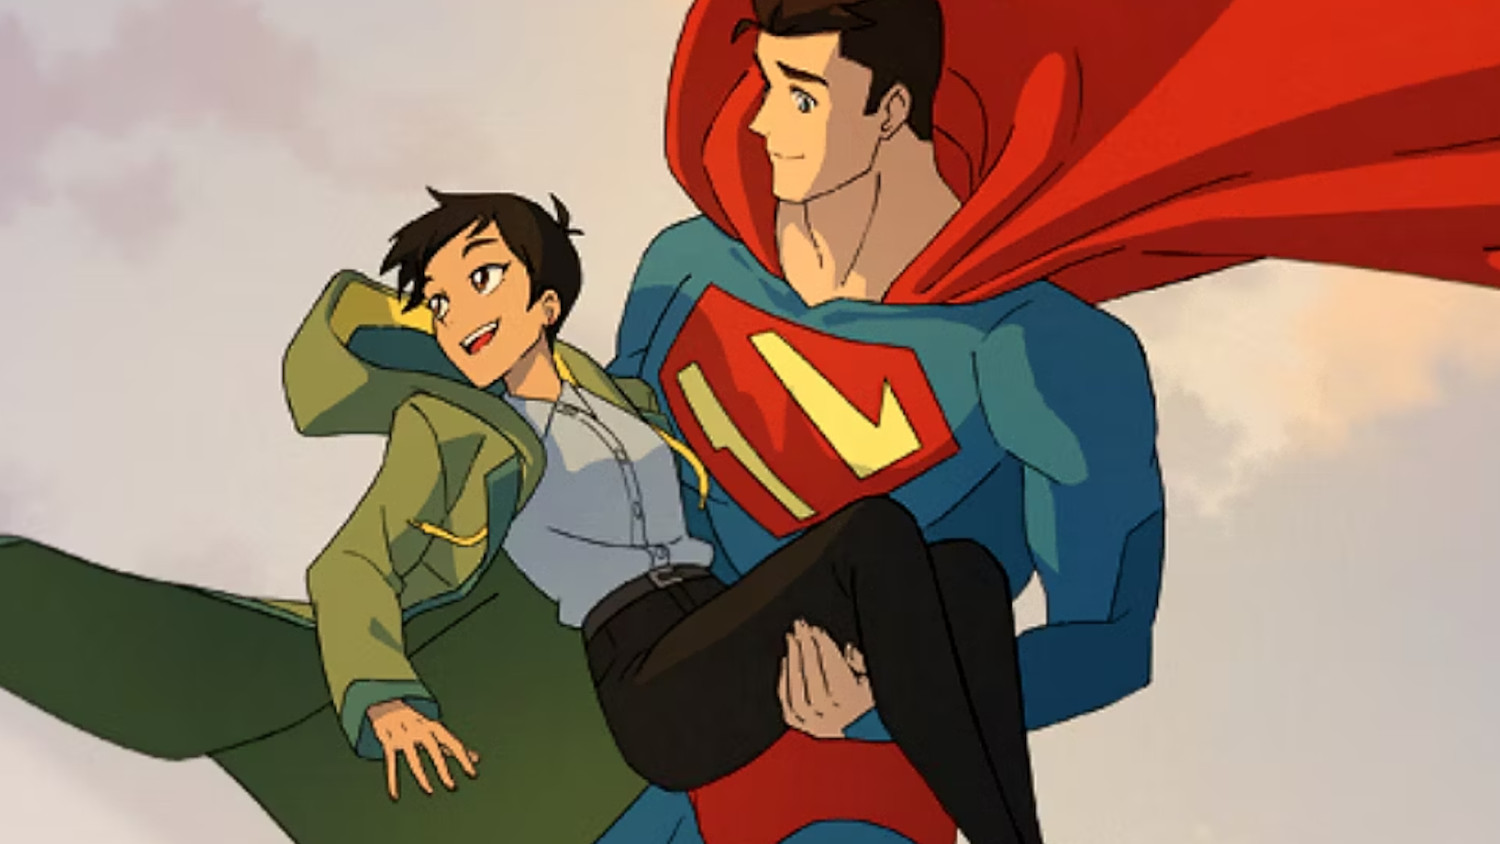 ‘My Adventures Of Superman’ Renewed For Season 3 On Adult Swim